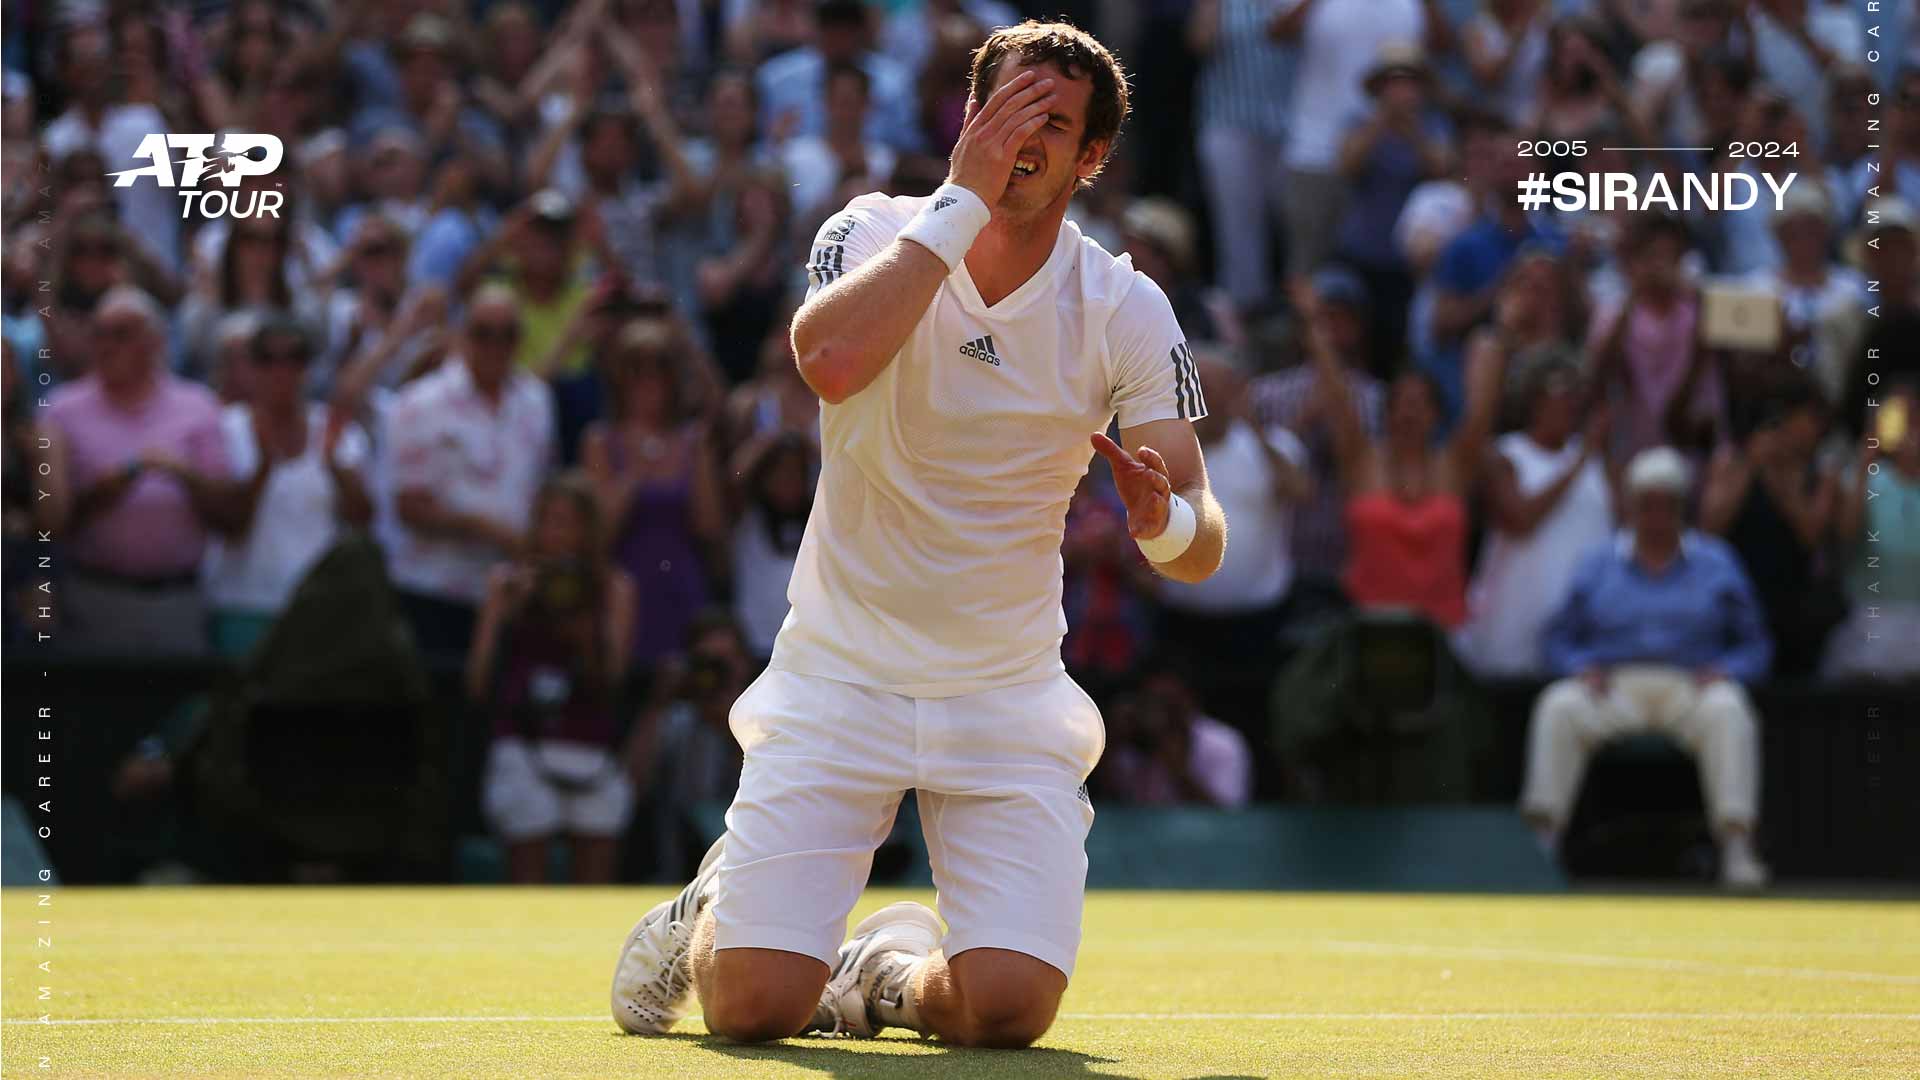 Andy Murray won two Wimbledon titles.